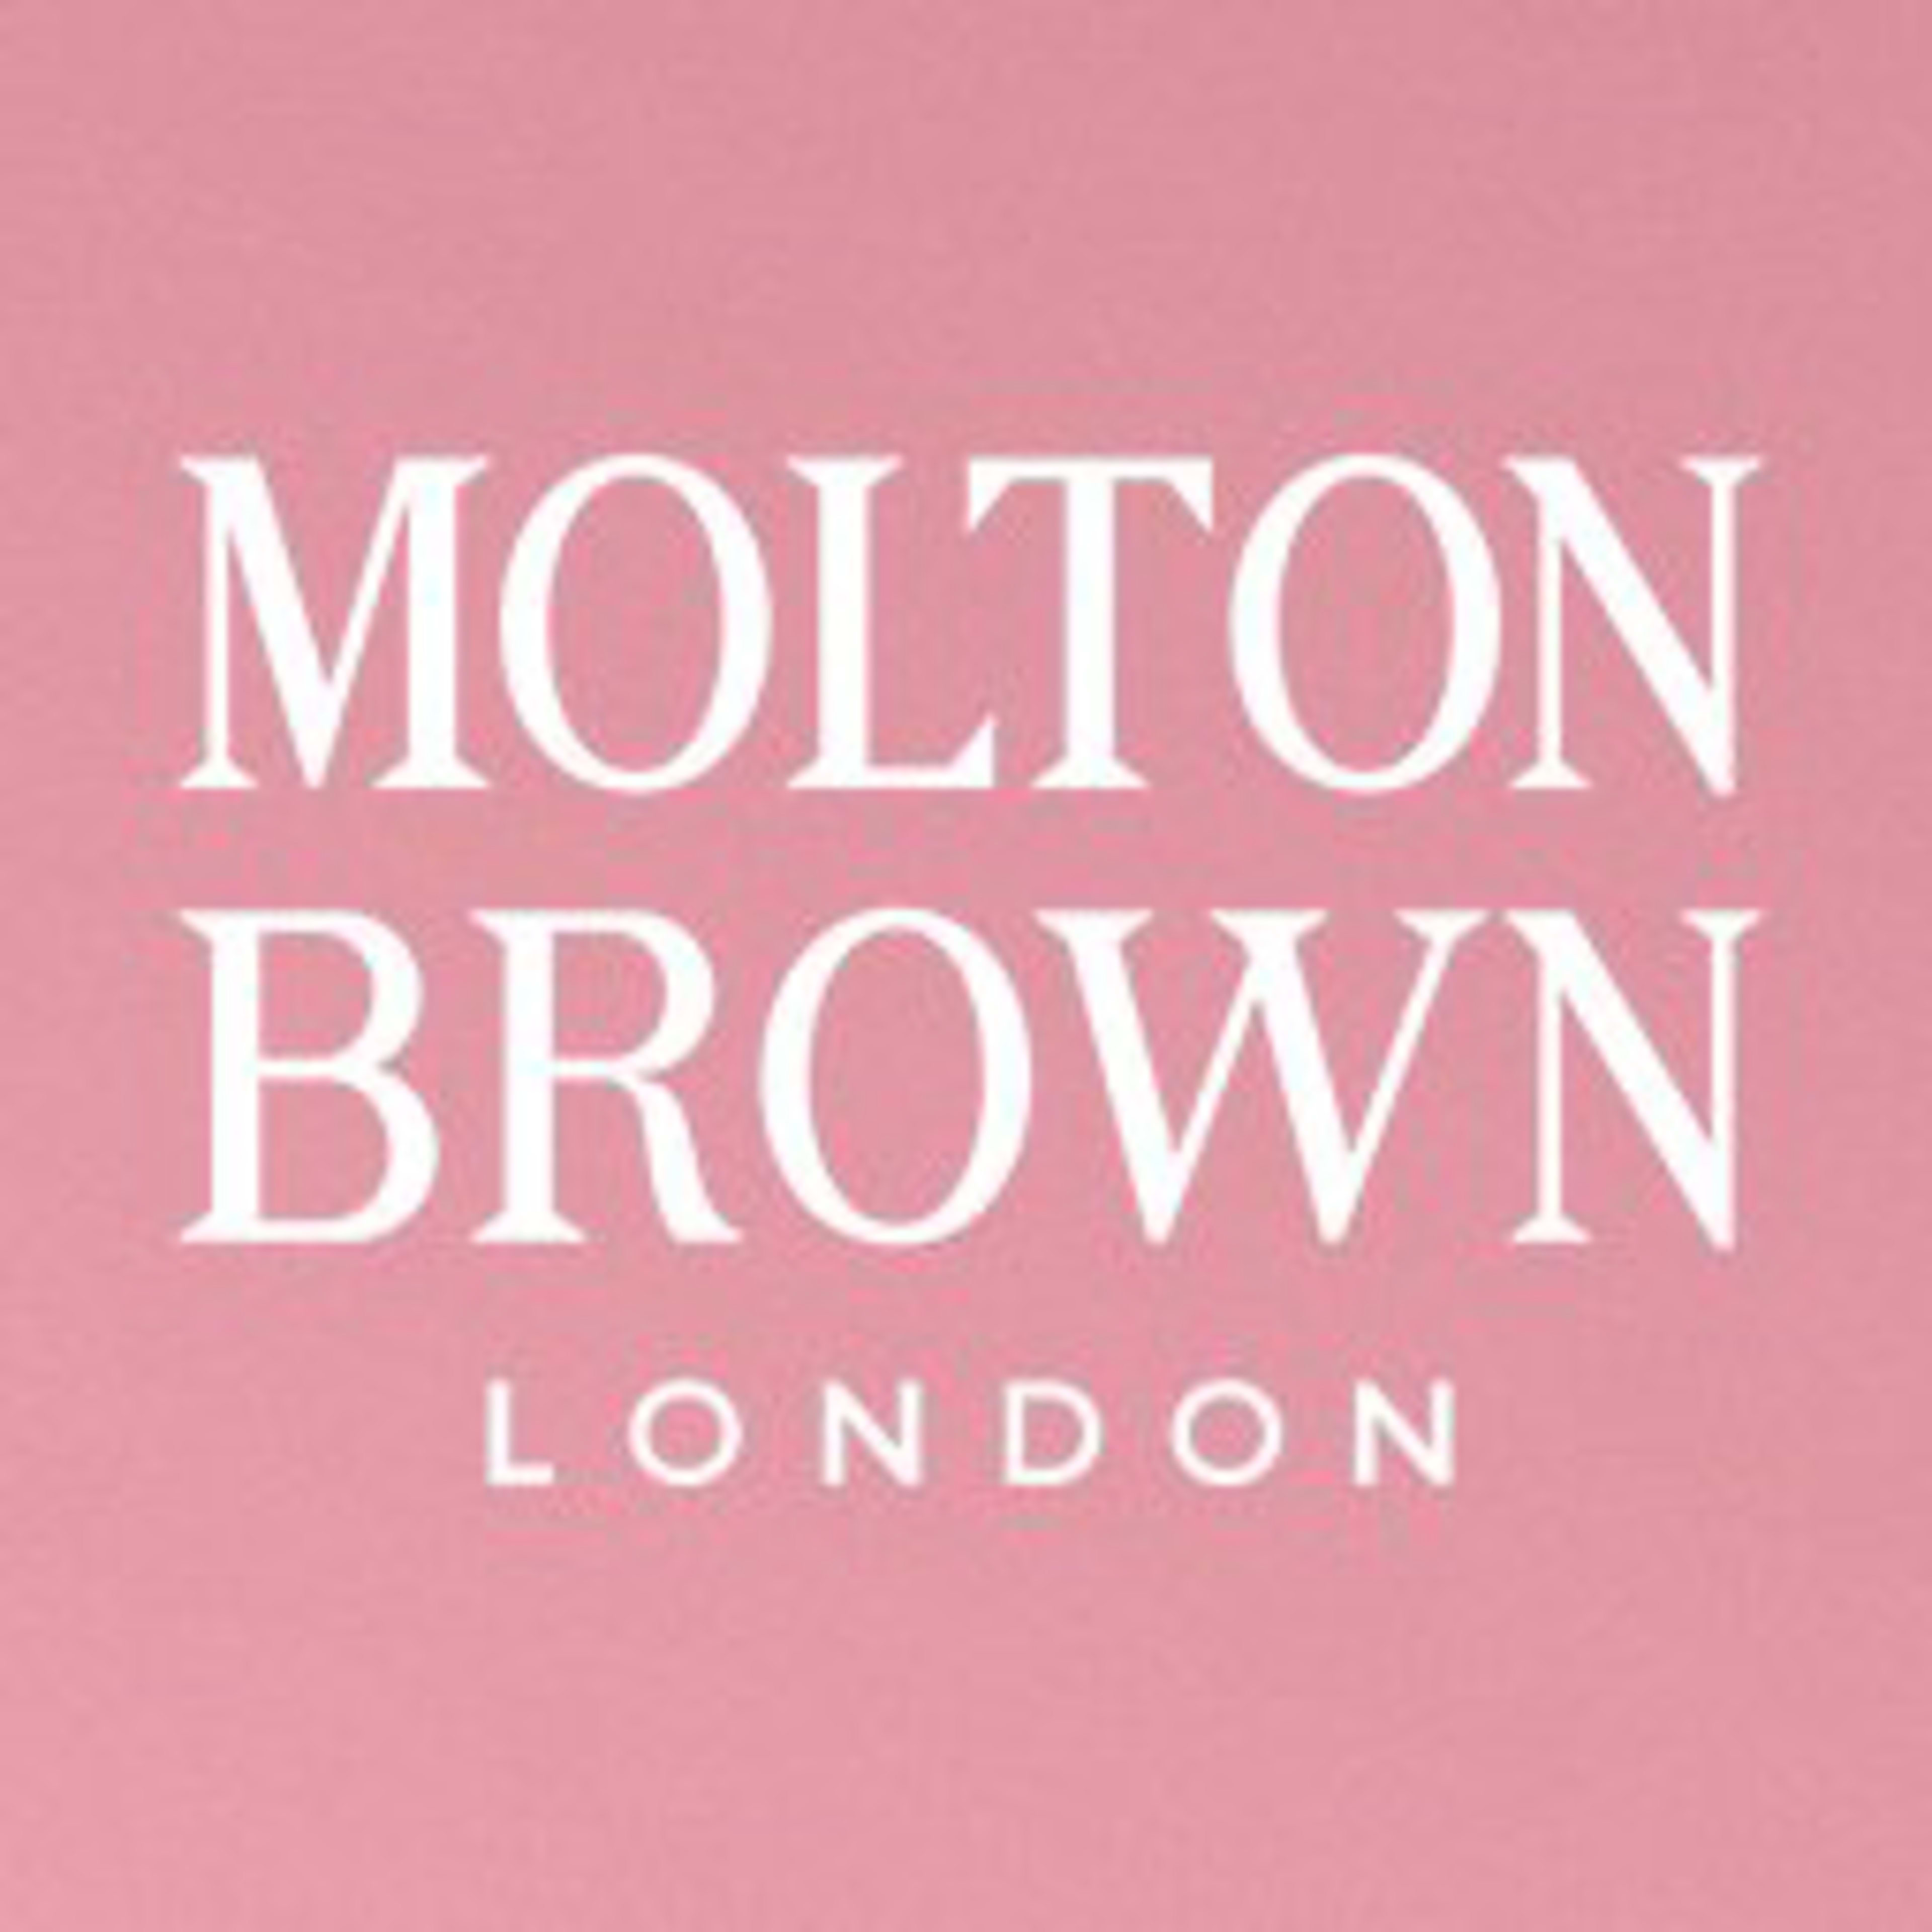 Molton BrownCode